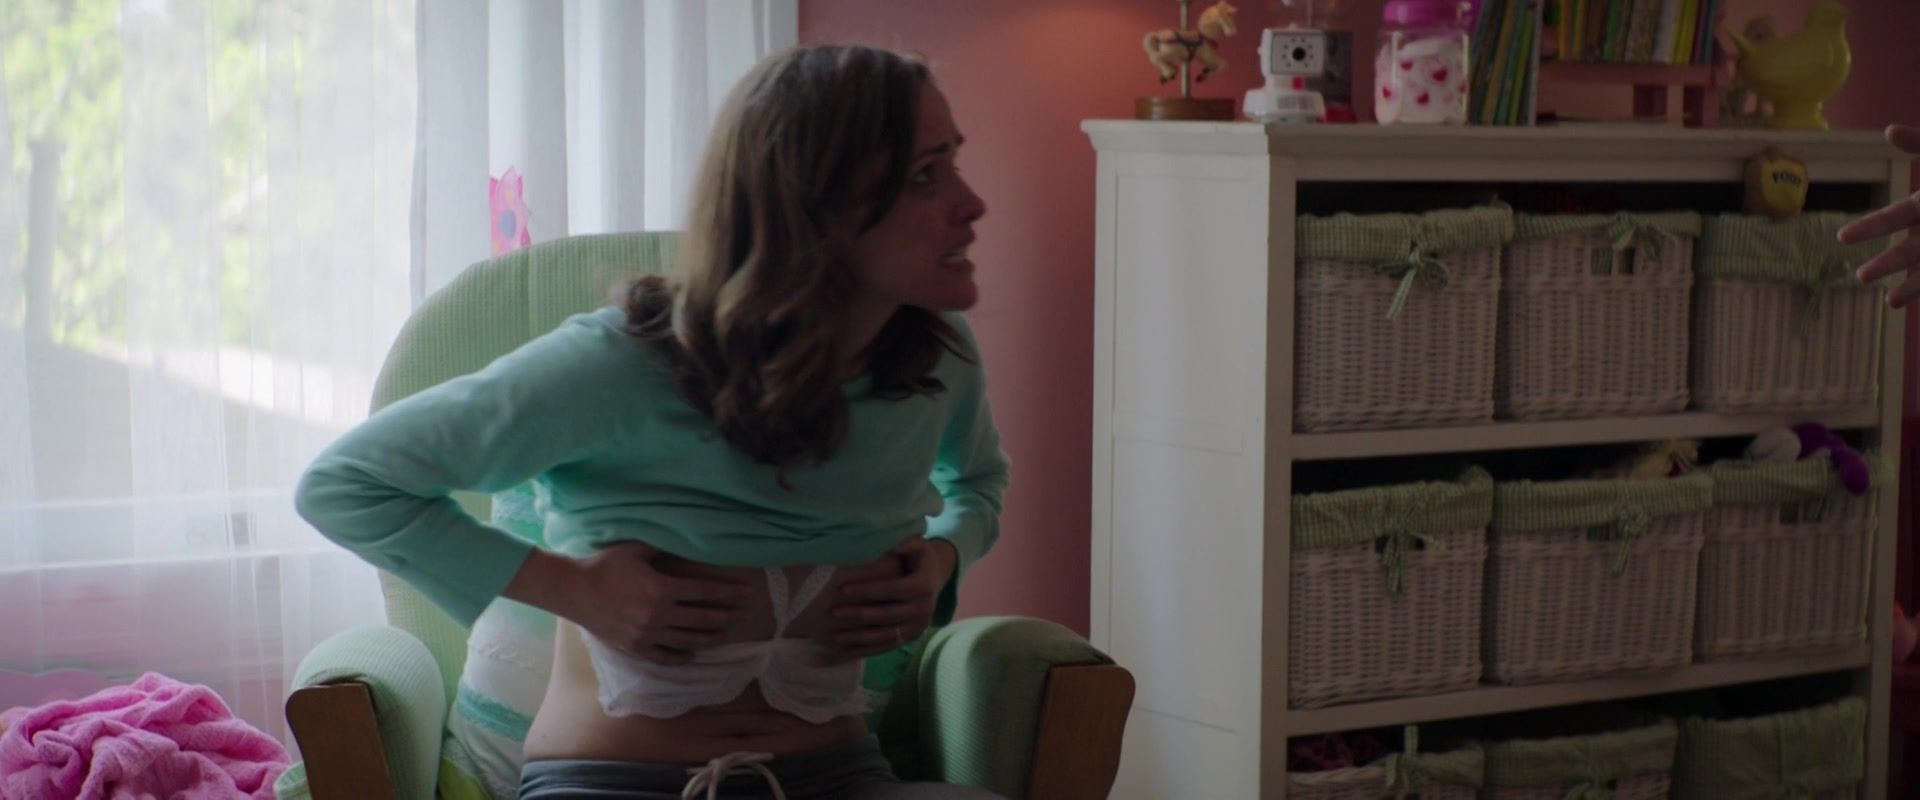 Amateur Xxx Sex scene with Rose Byrne nude - Neighbors (2014) Javon